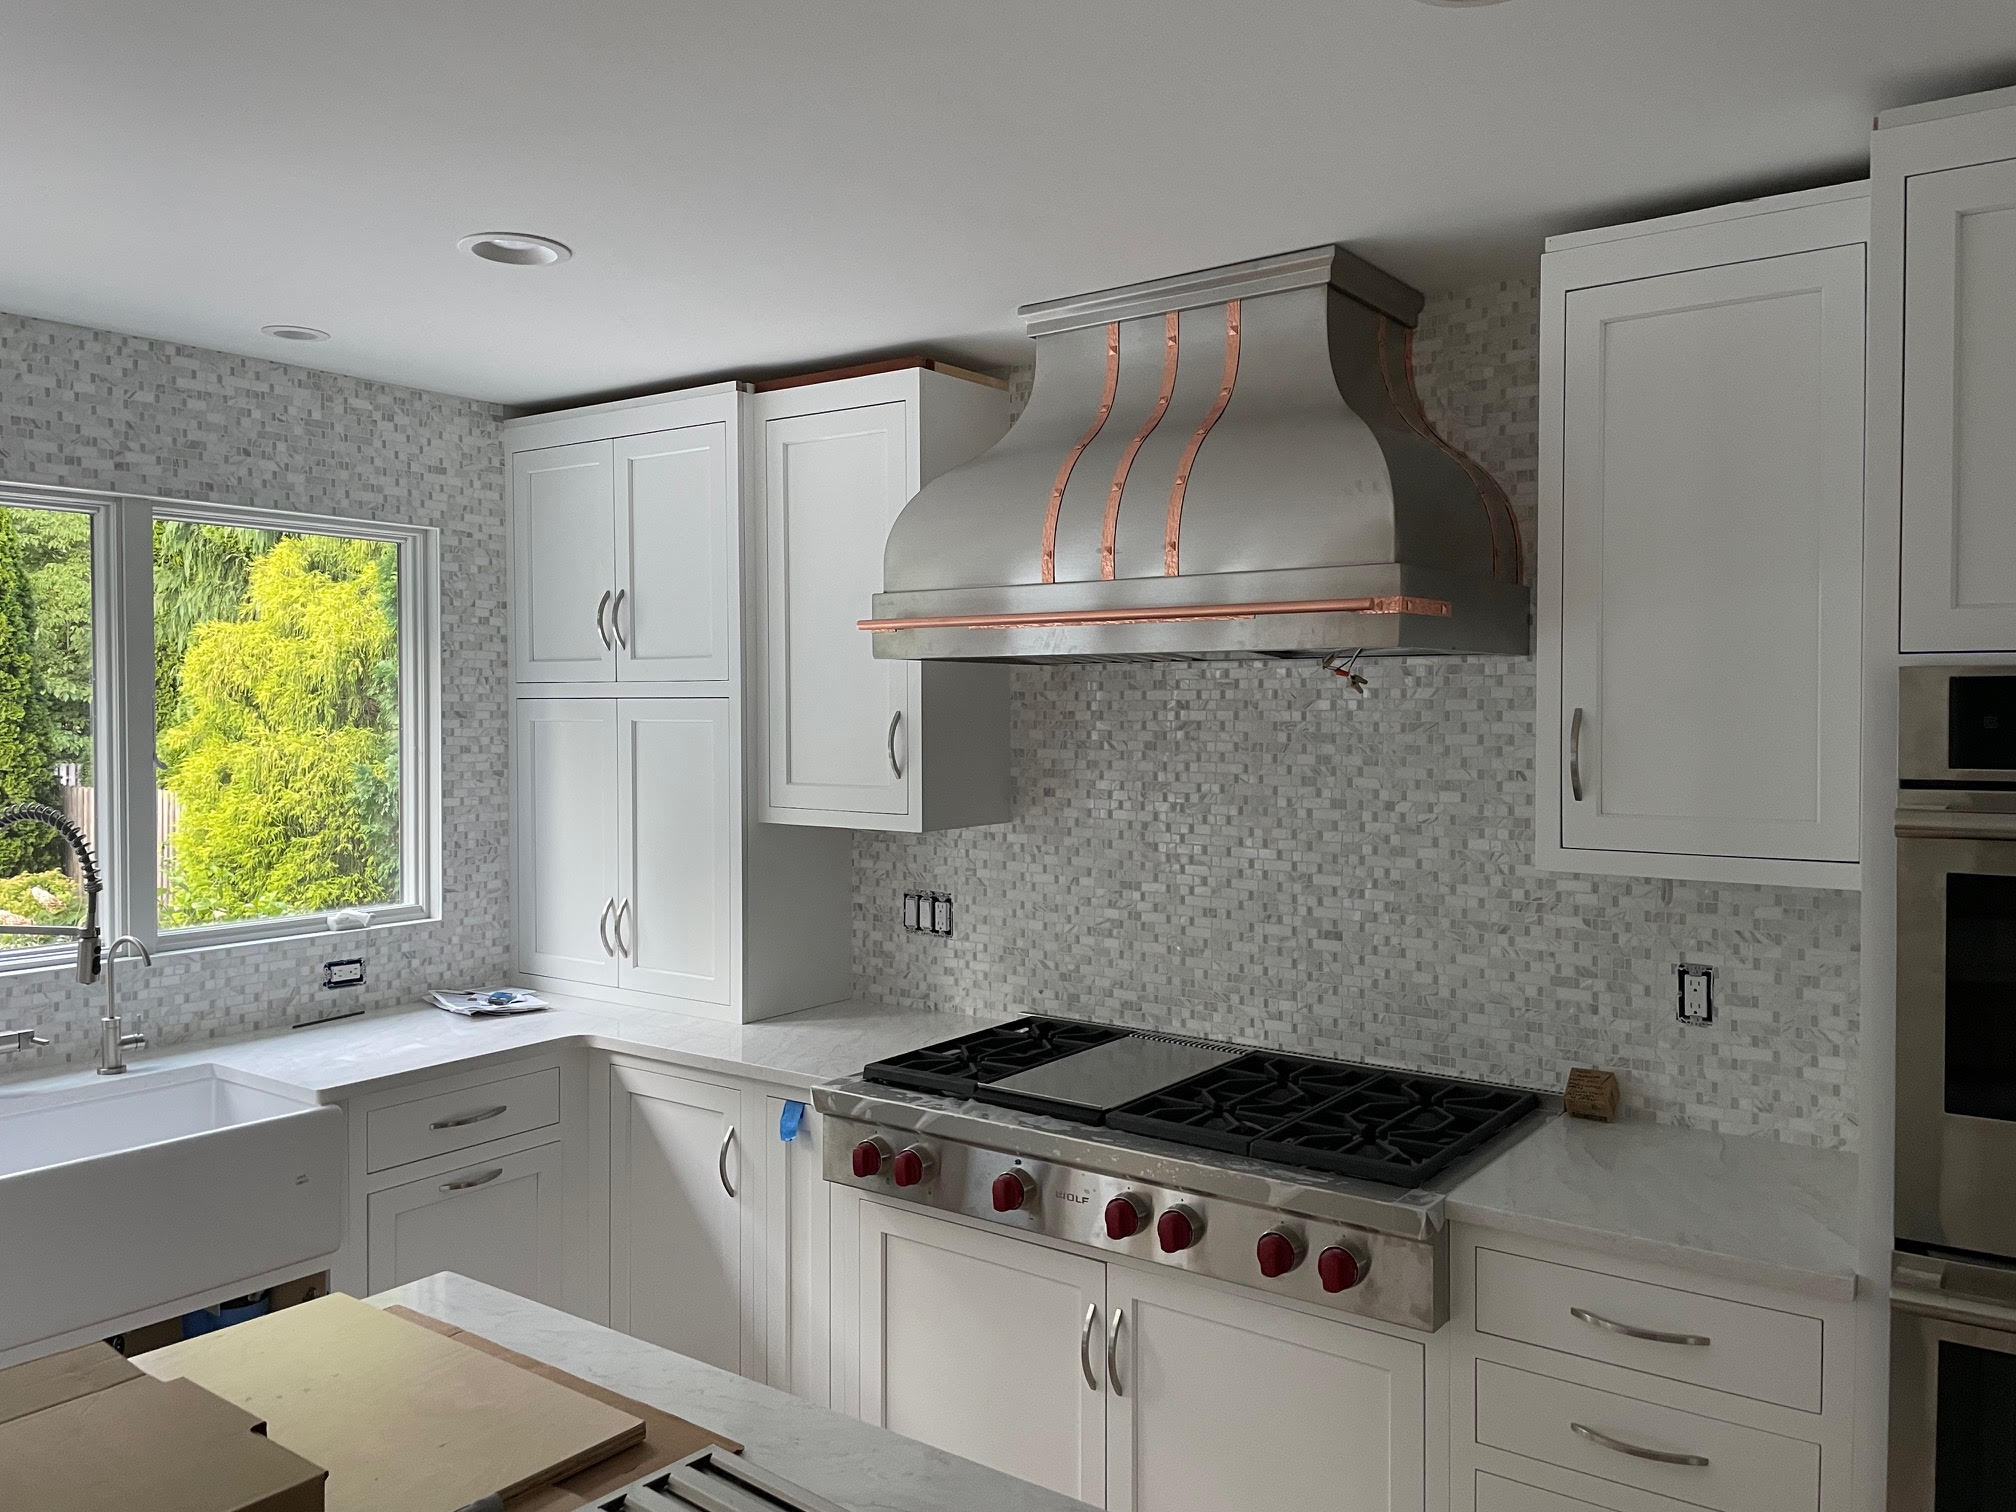 Charming kitchen design with range hood, white cabinets, marble countertops and brick backsplash